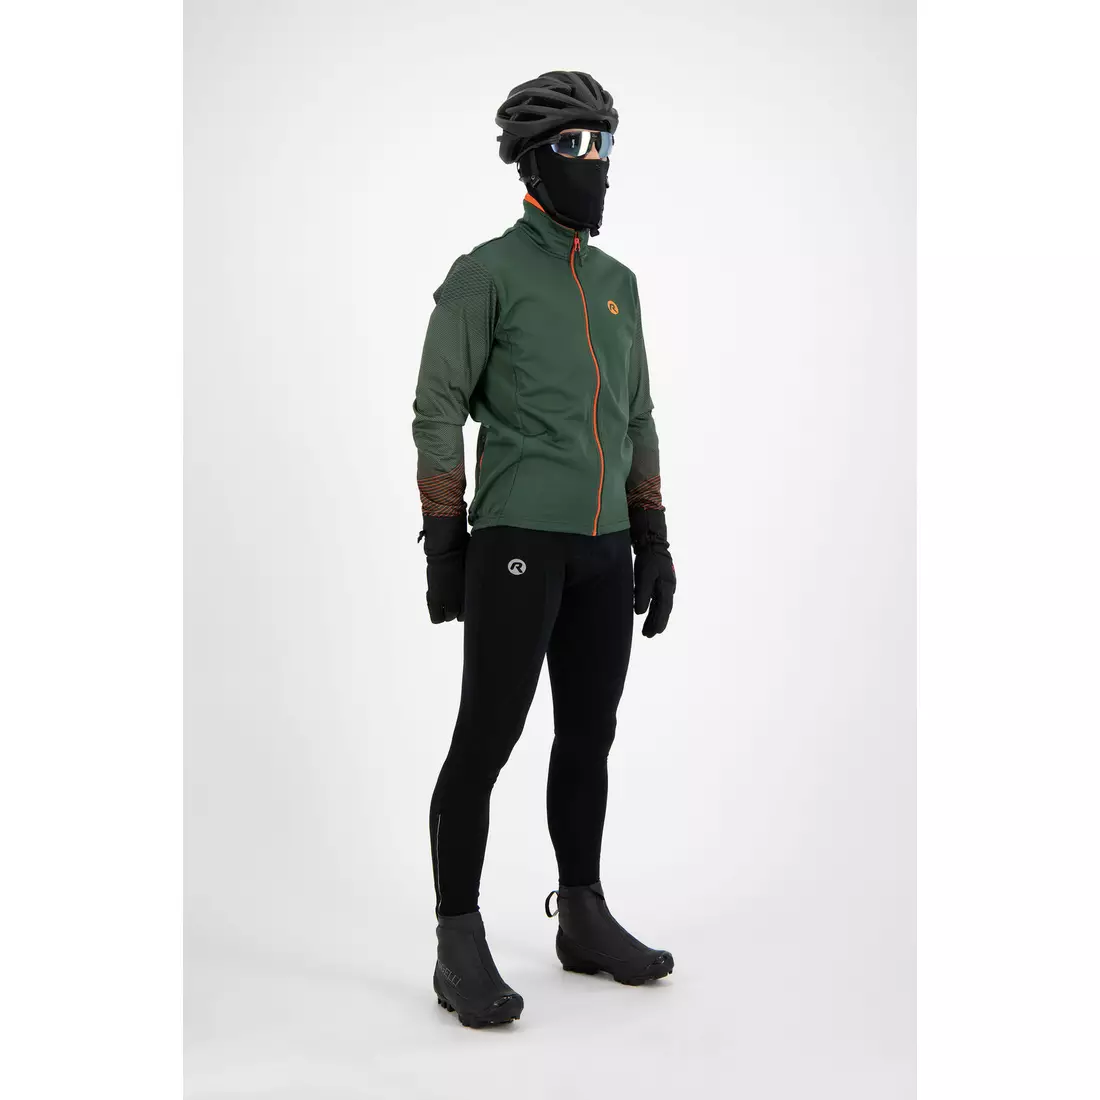 ROGELLI WIRE men's winter softshell bike jacket, green-orange